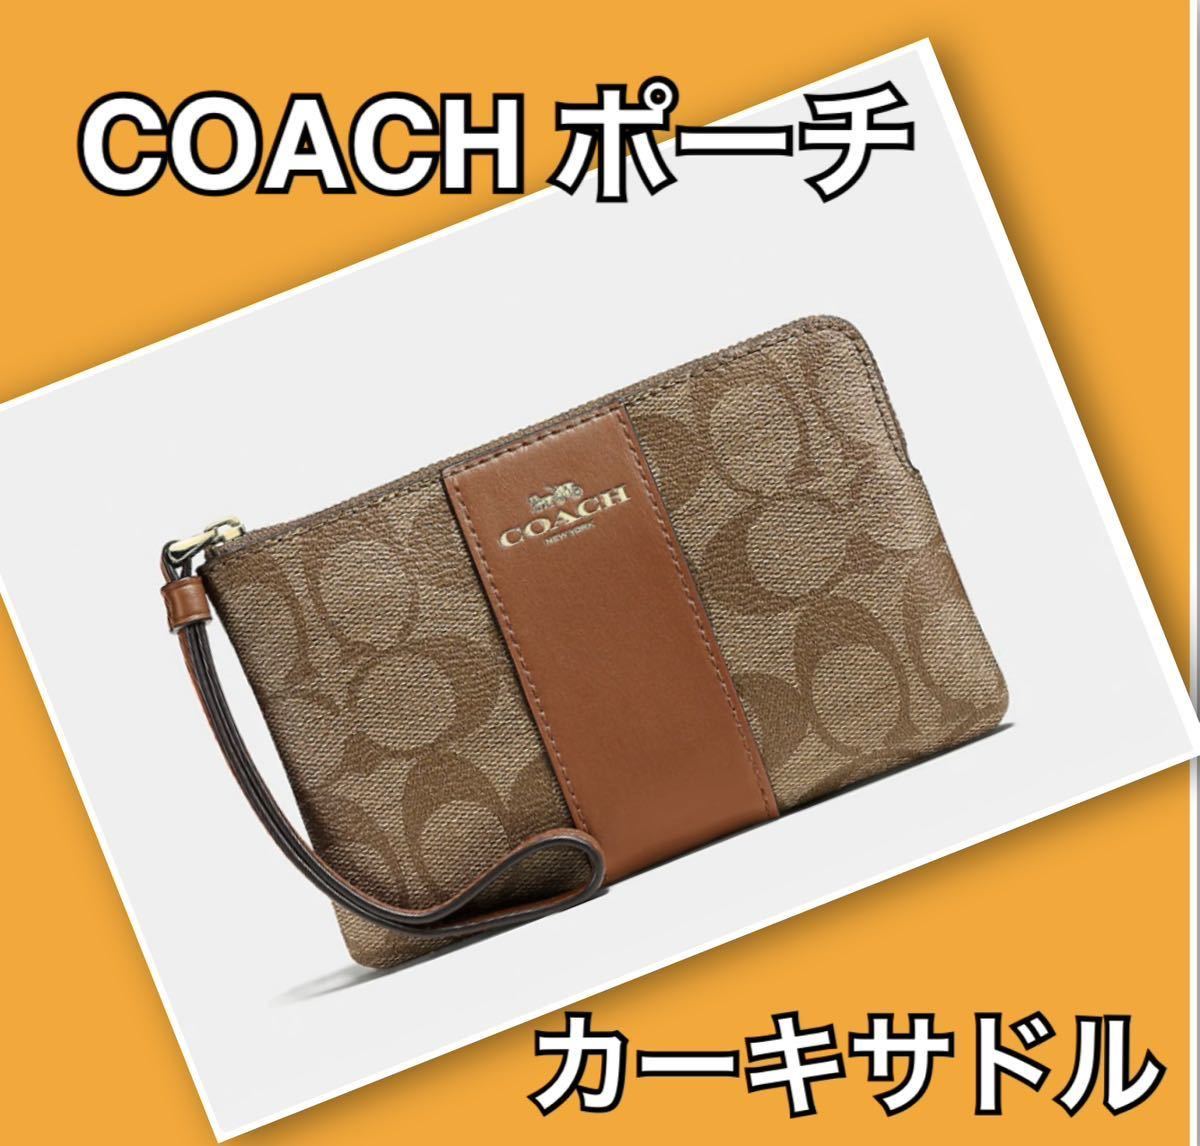 COACH コーチ ポーチ 正規品 カーキサドル 新品 ブランド 人気_画像1